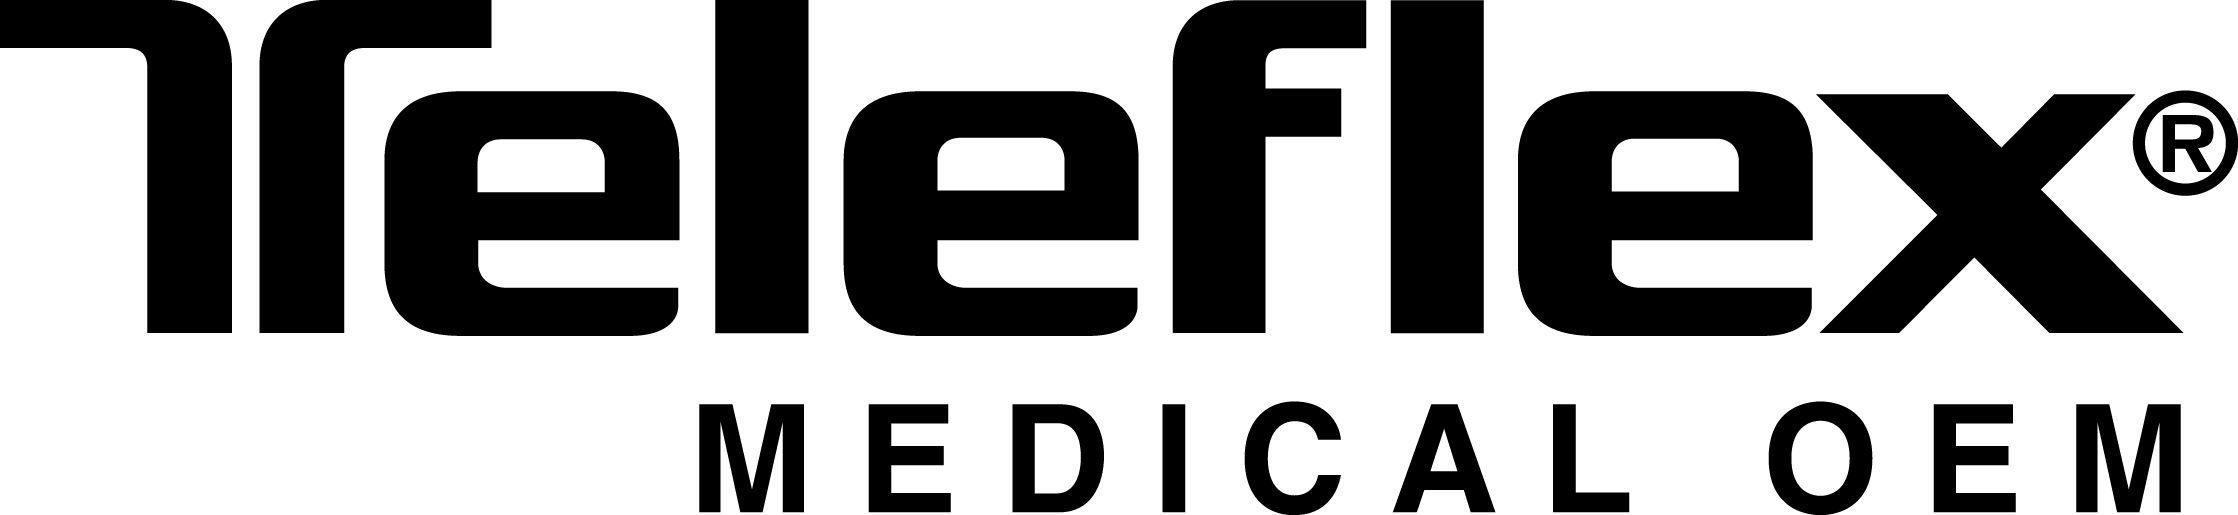 Teleflex Logo - Work with the experts at Teleflex Medical OEM